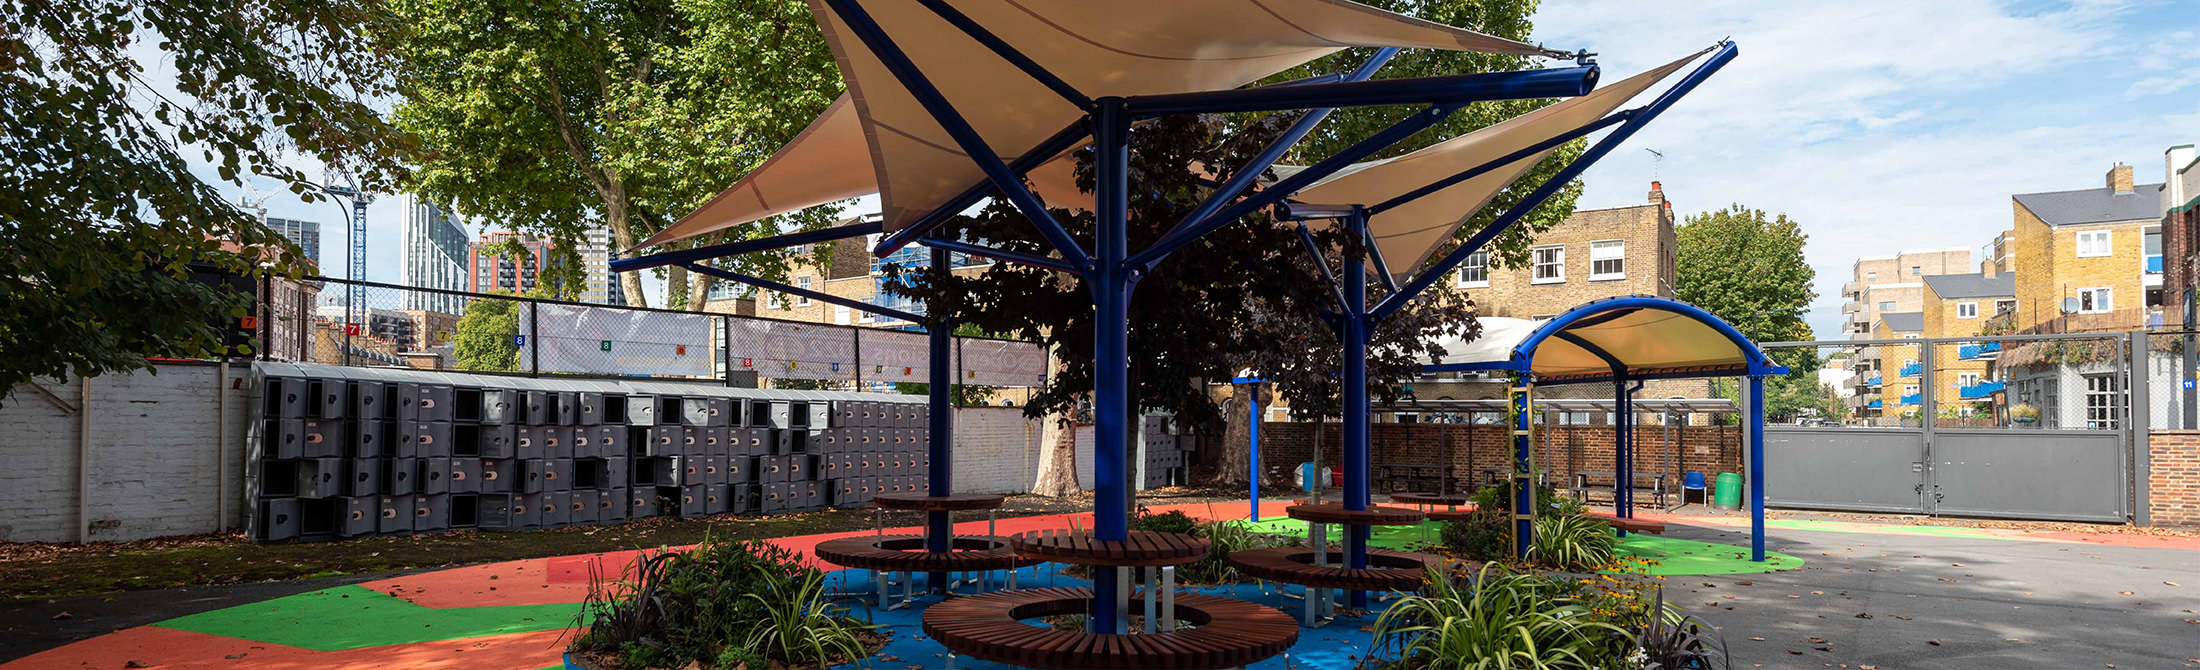 Three tensile fabric canopies on school playground